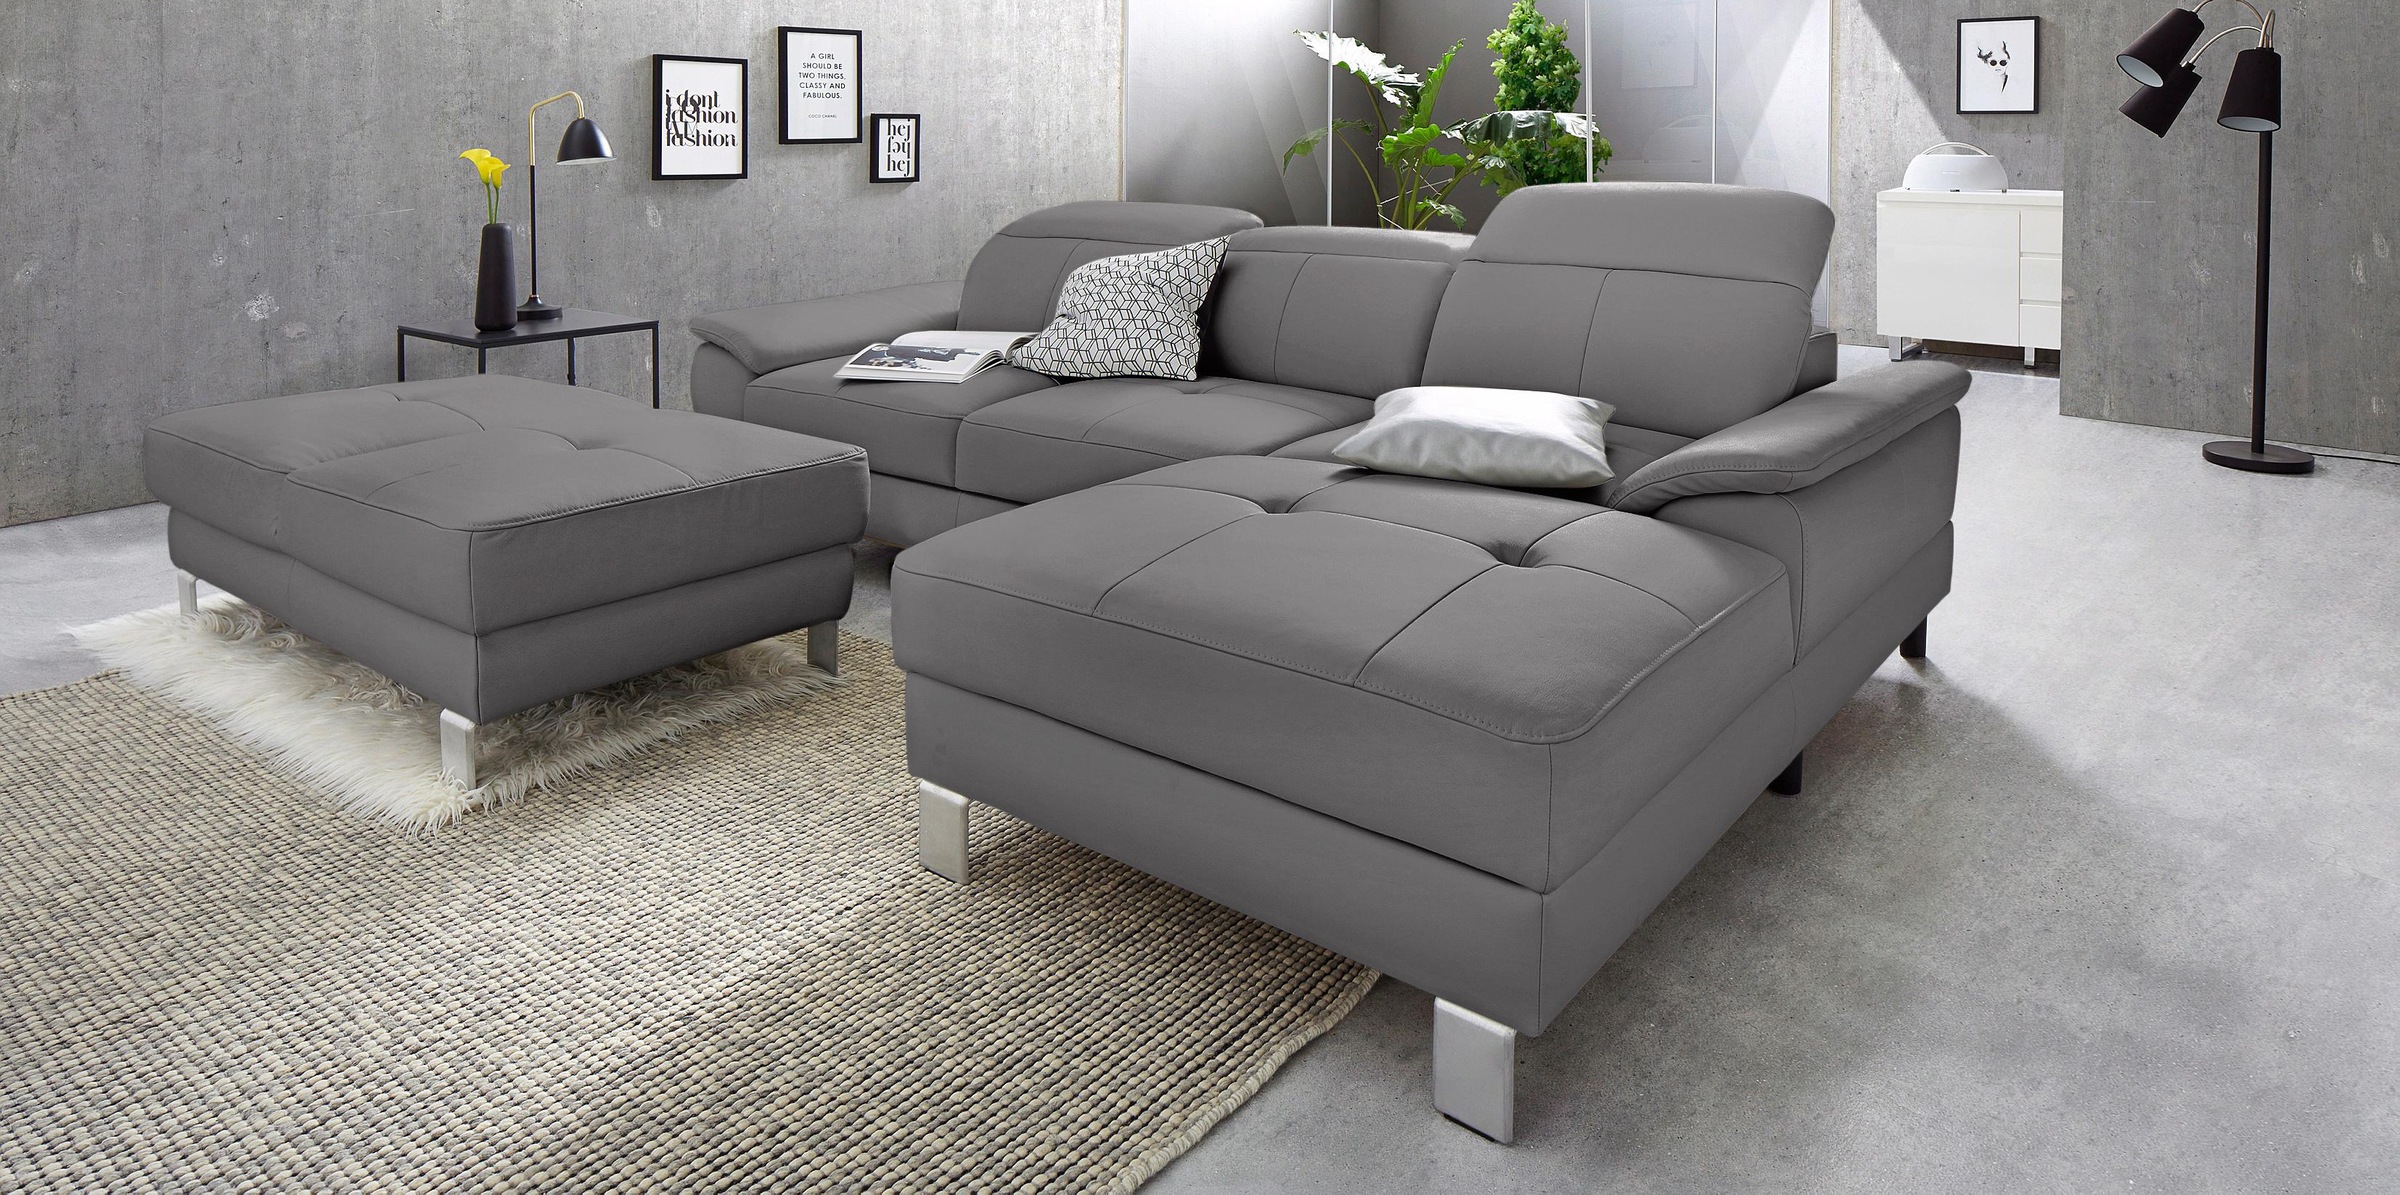 Hocker auf fashion - 2« Rechnung sofa exxpo »Mantua kaufen